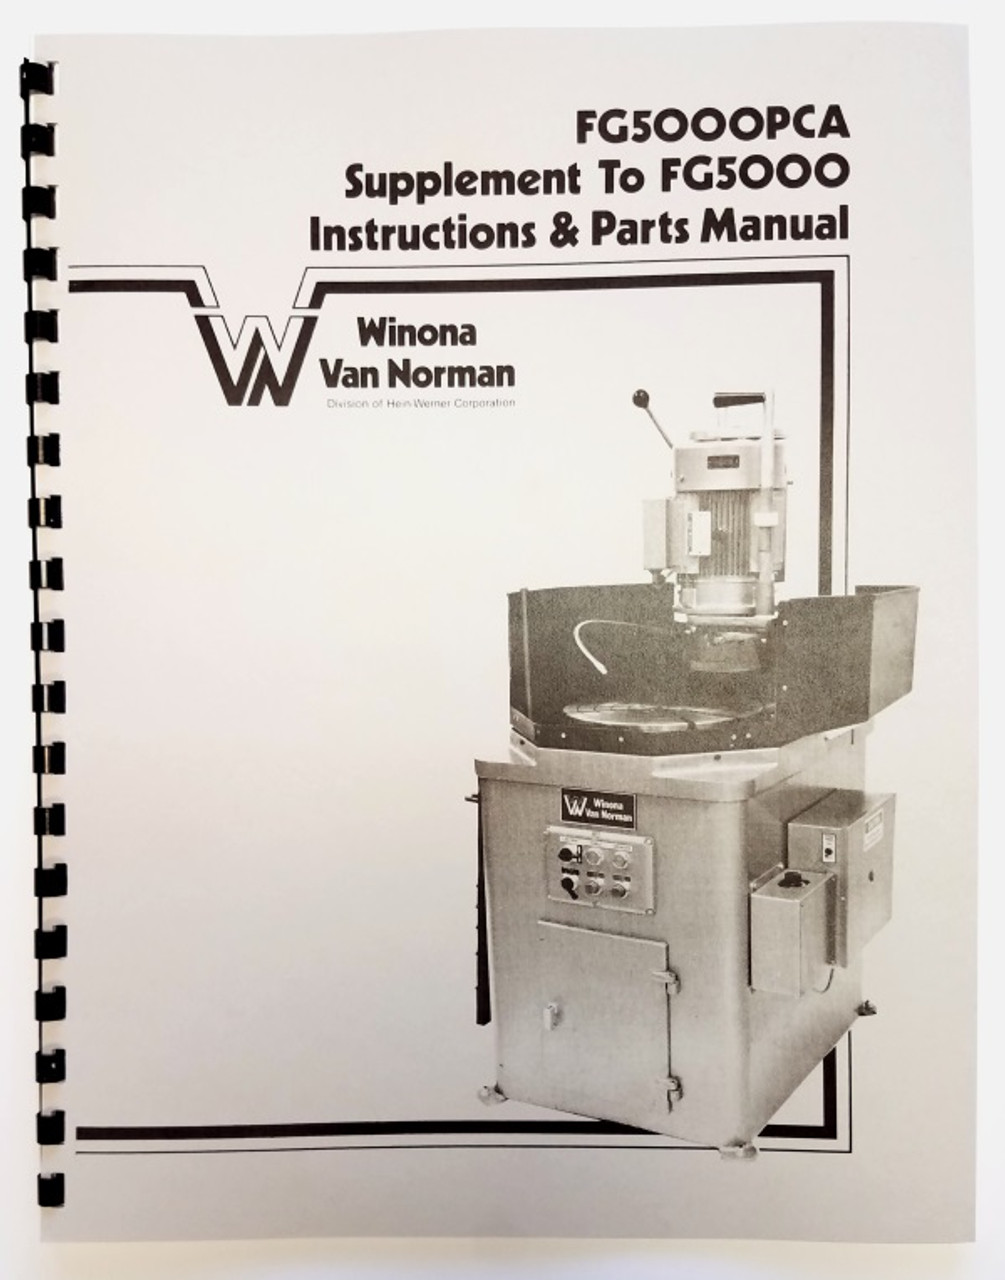 Winona Van Norman FG5000PCA Manual